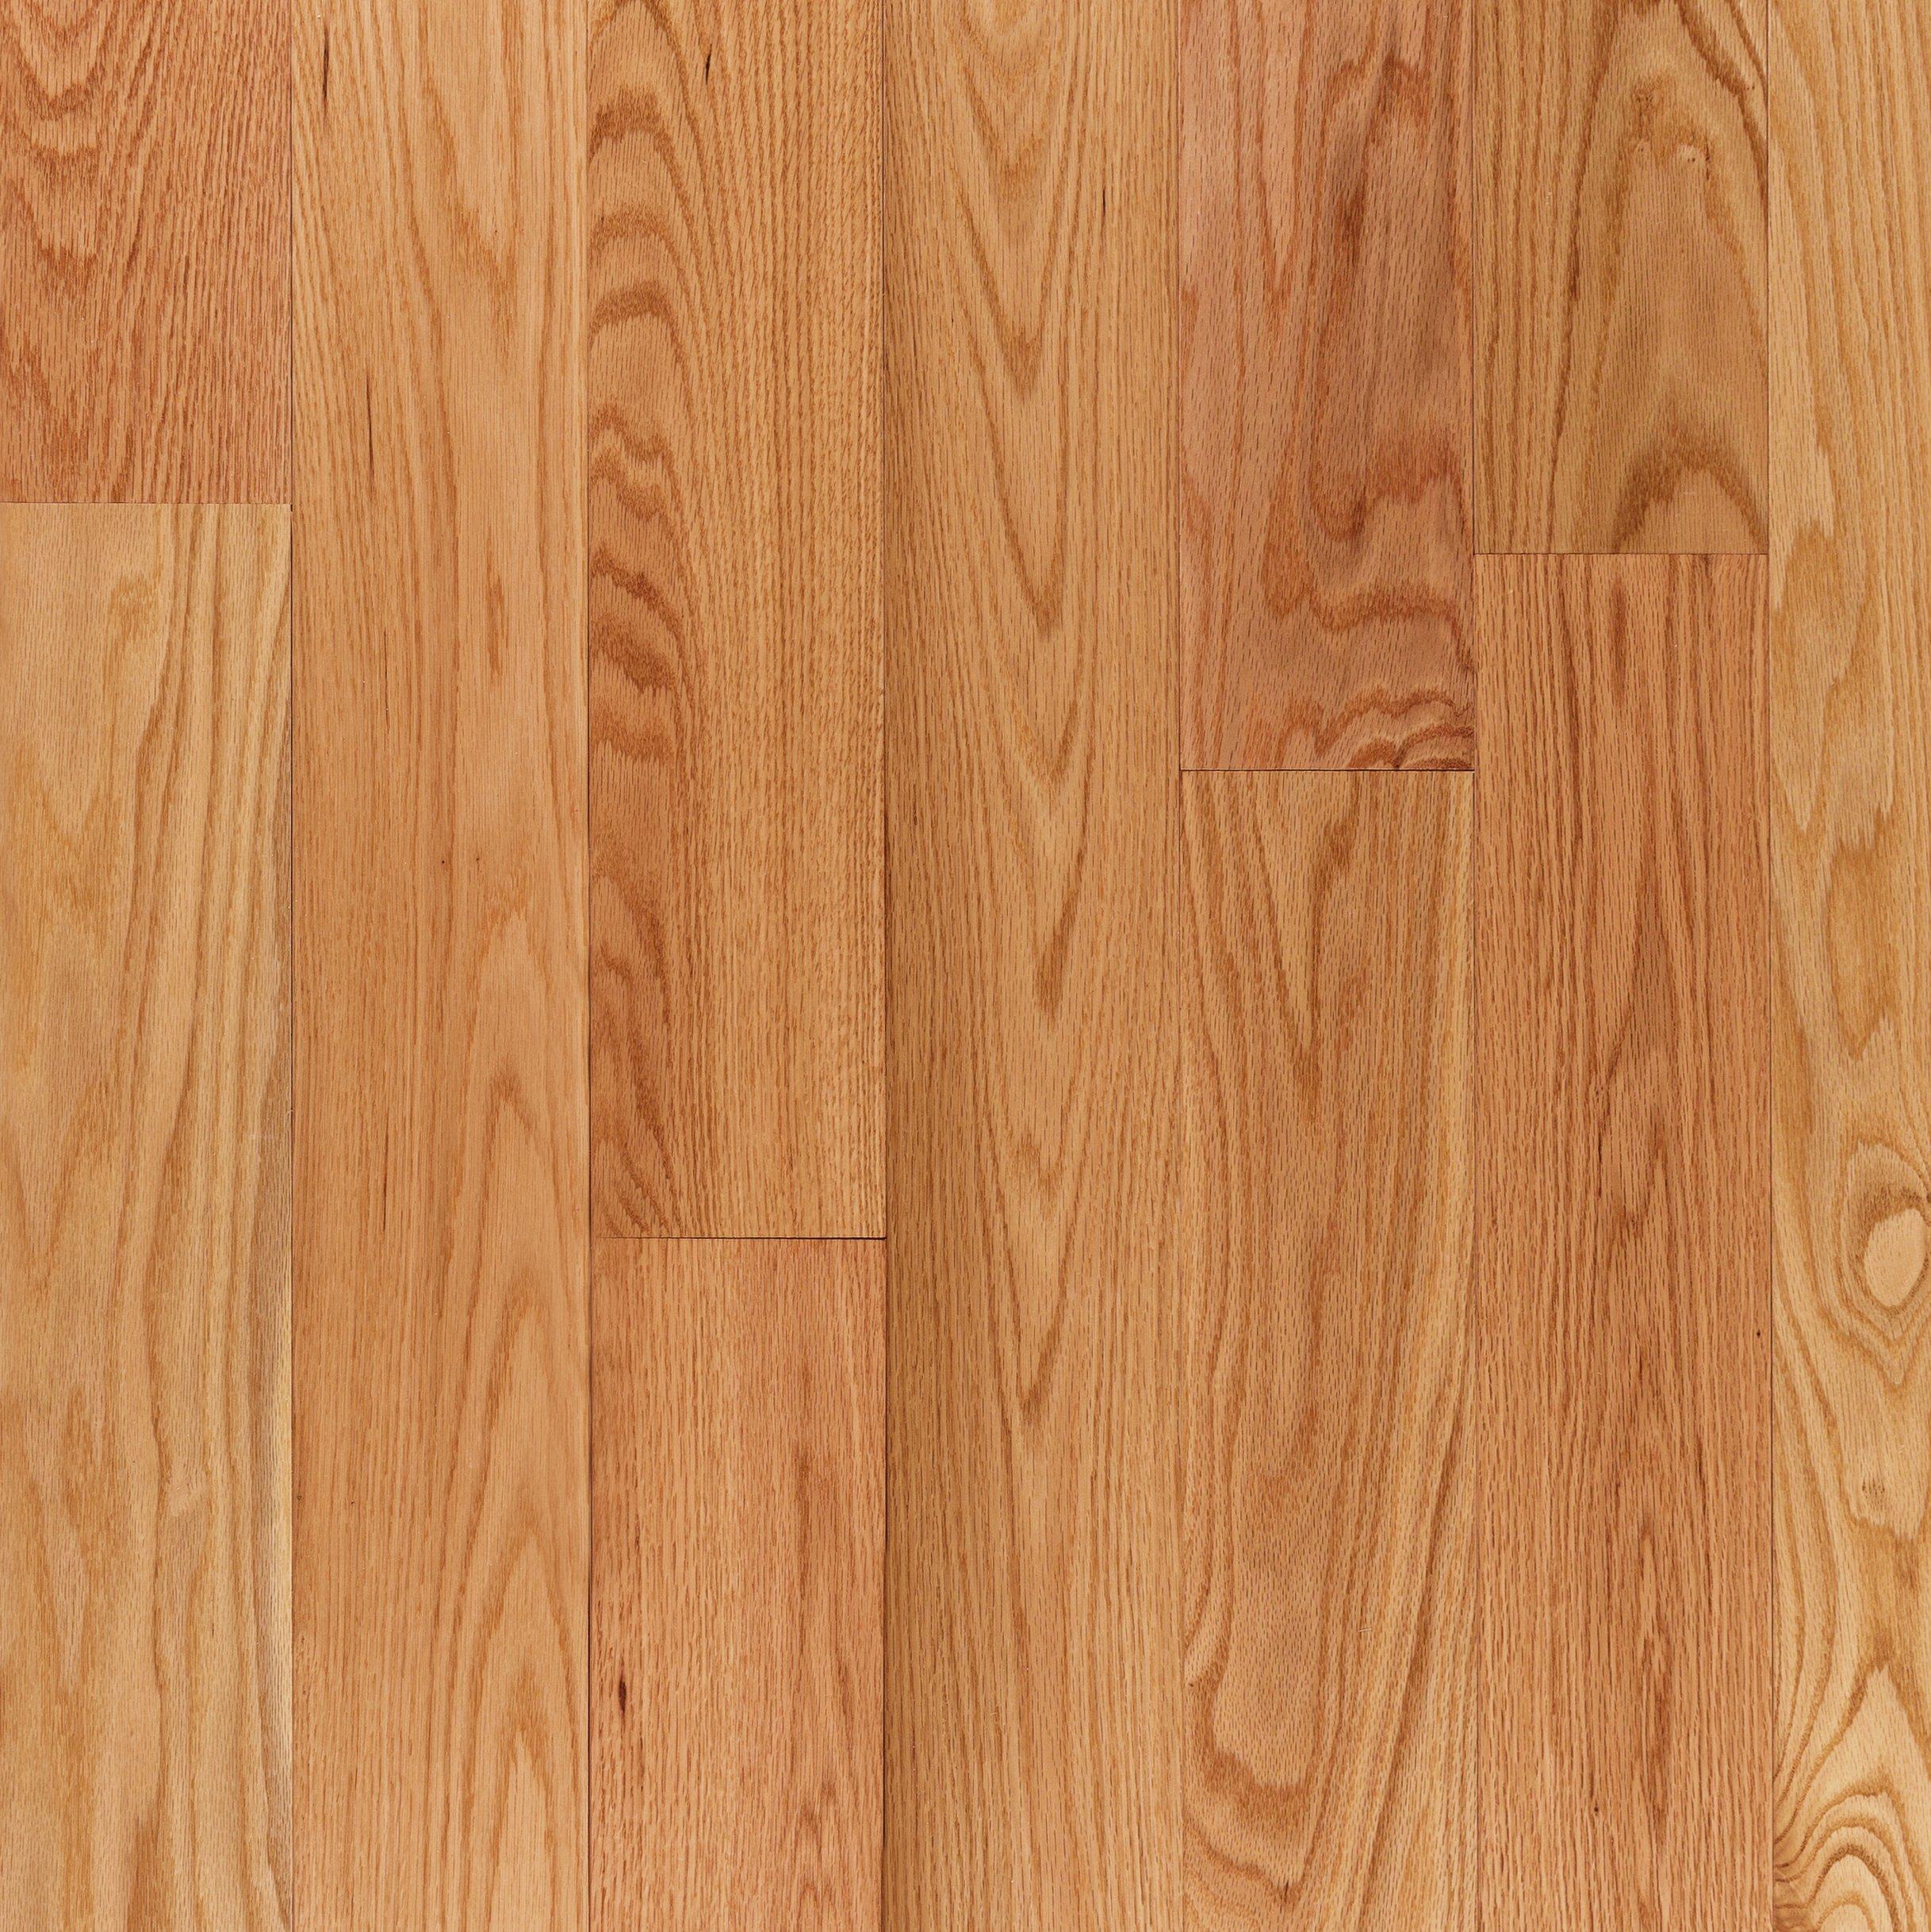 Red Oak Smooth Solid Hardwood Floor, Floor And Decor Unfinished Hardwood